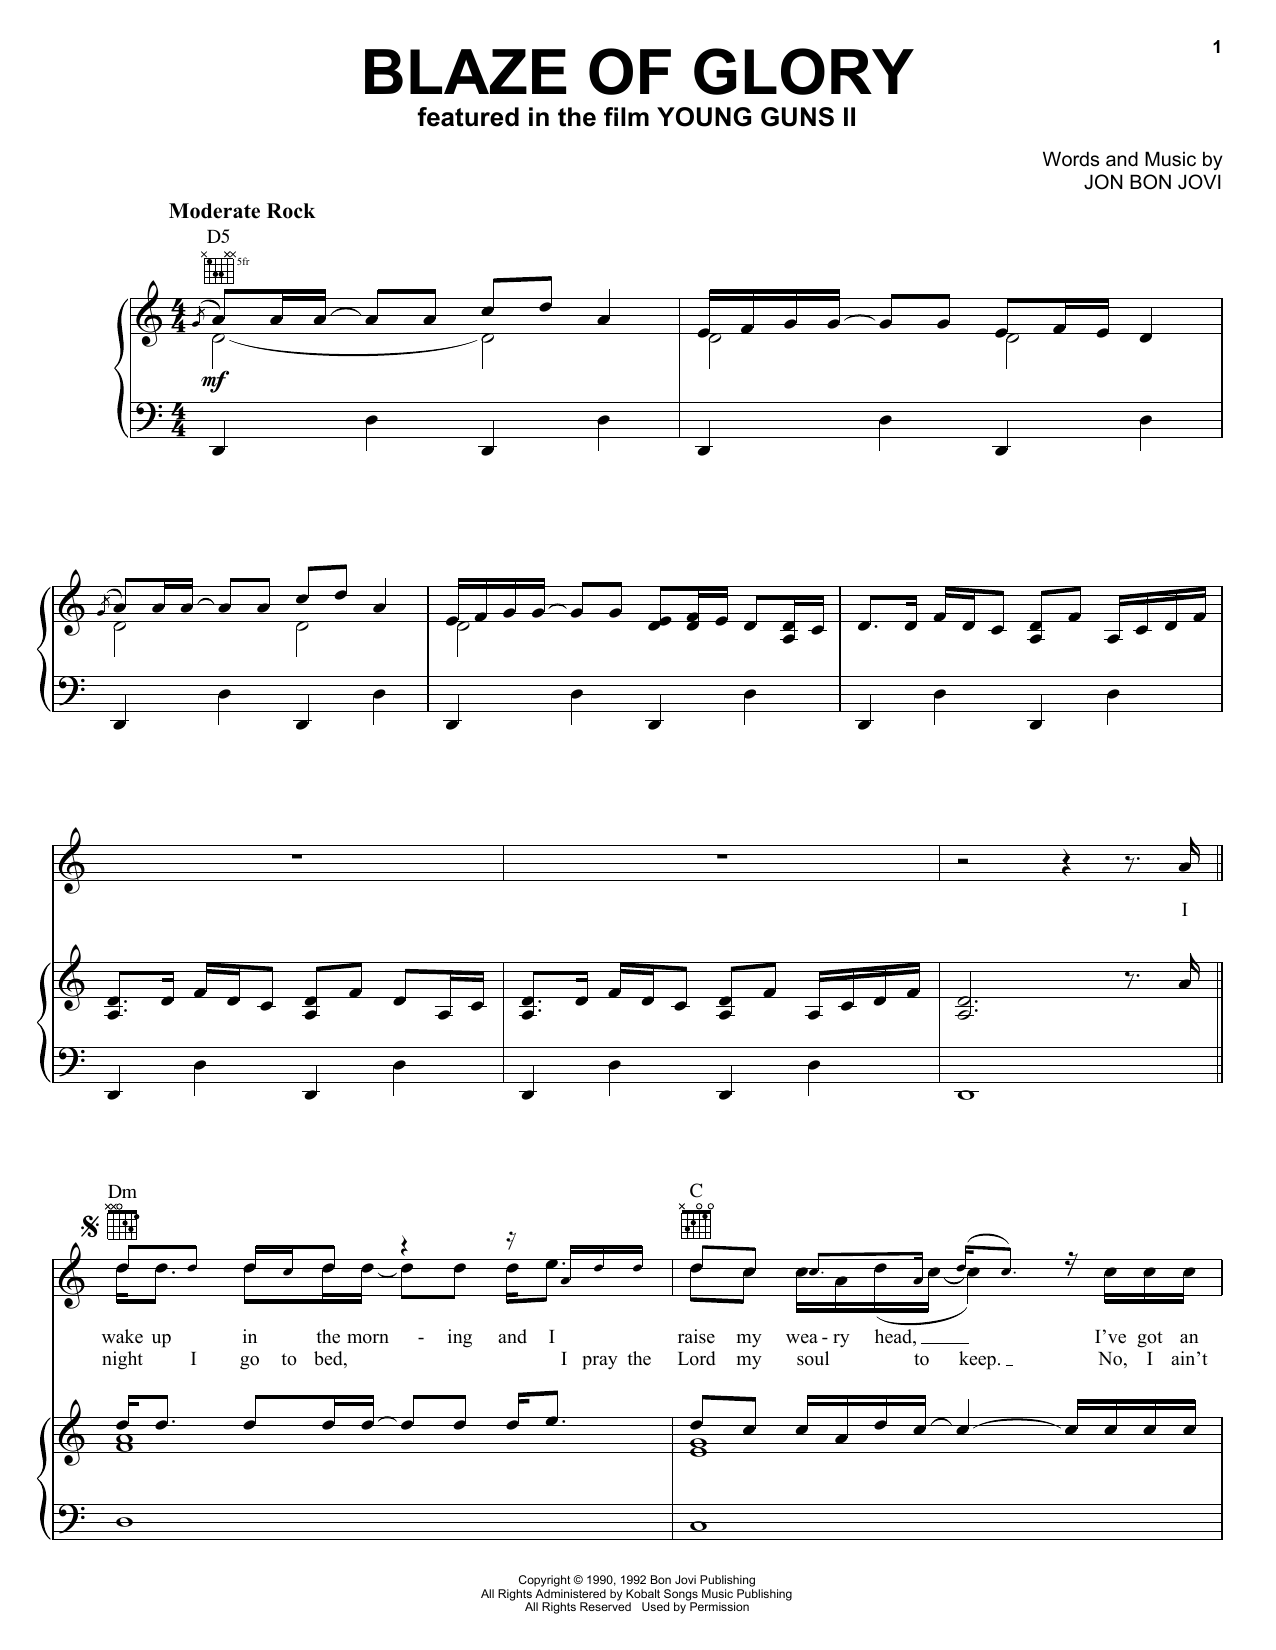 Download Jon Bon Jovi Blaze Of Glory Sheet Music and learn how to play Alto Saxophone PDF digital score in minutes